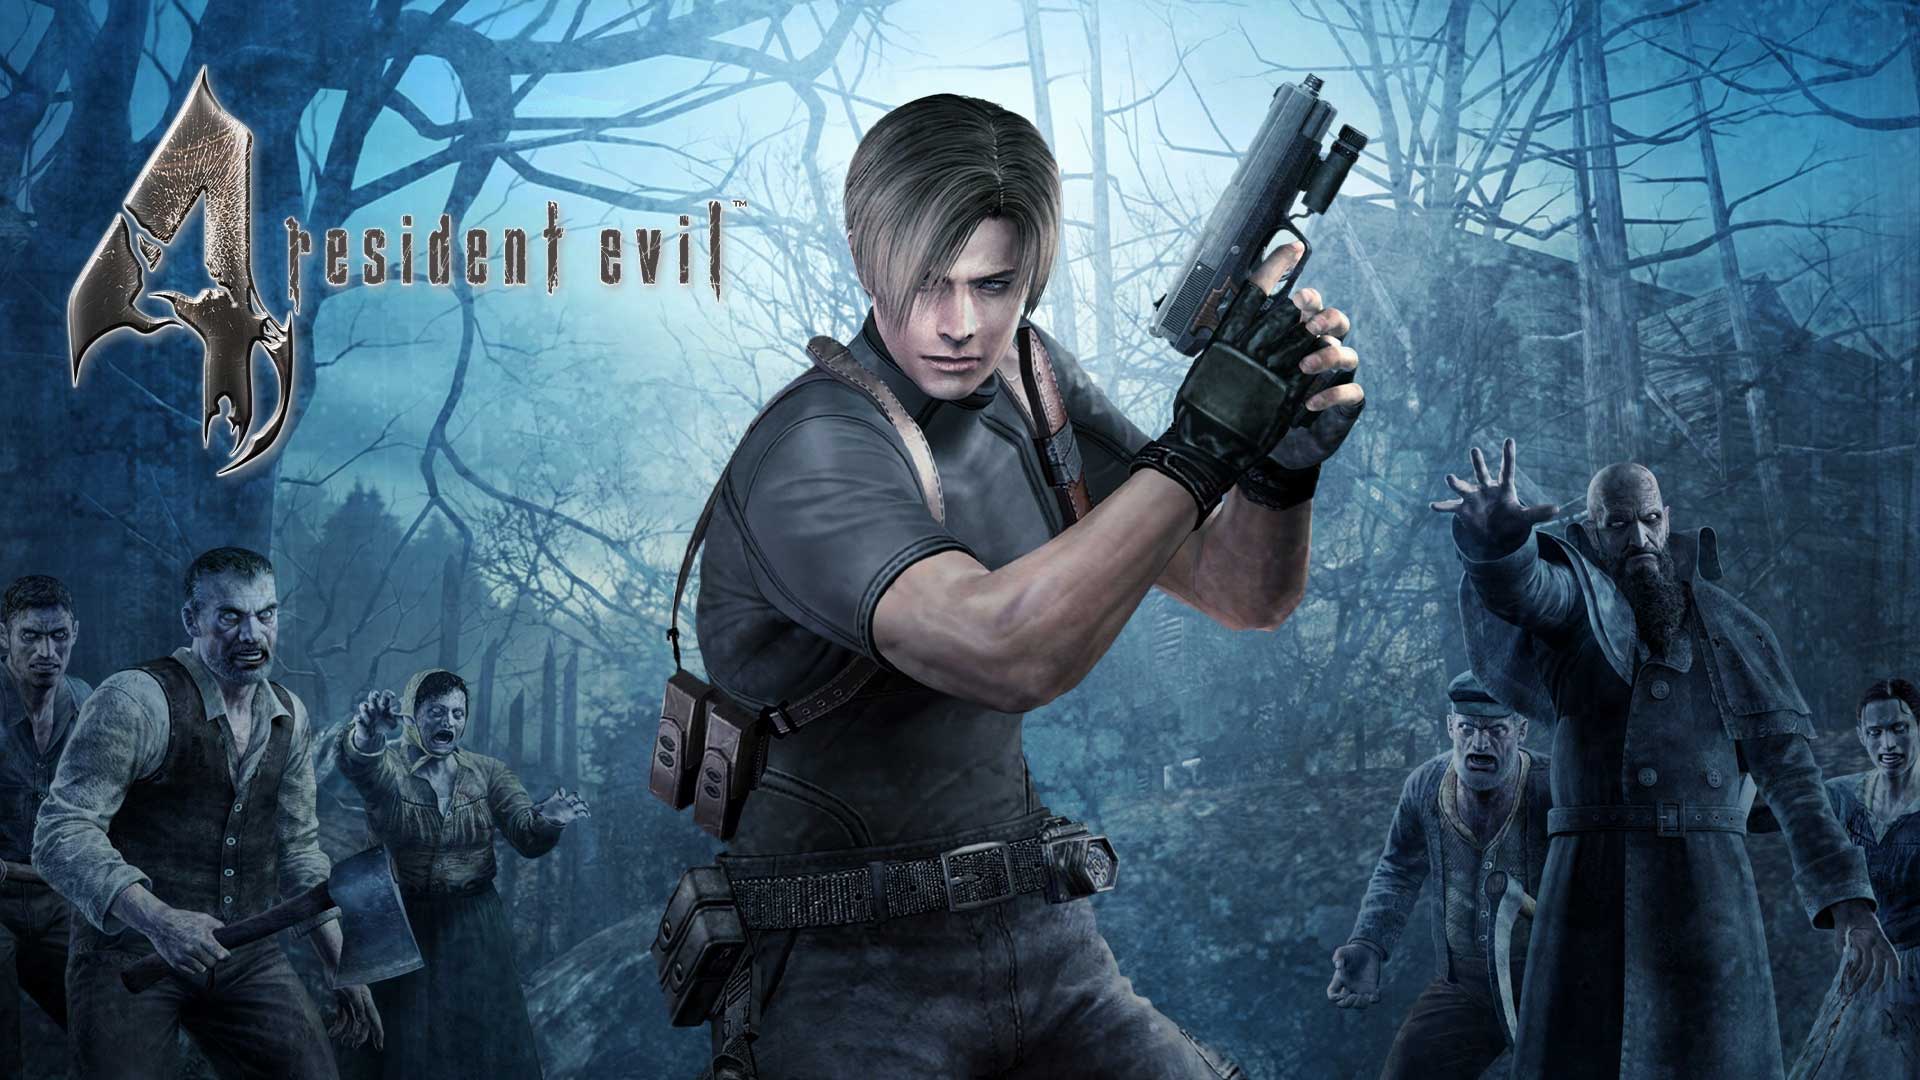 Capcom Resident Evil 4